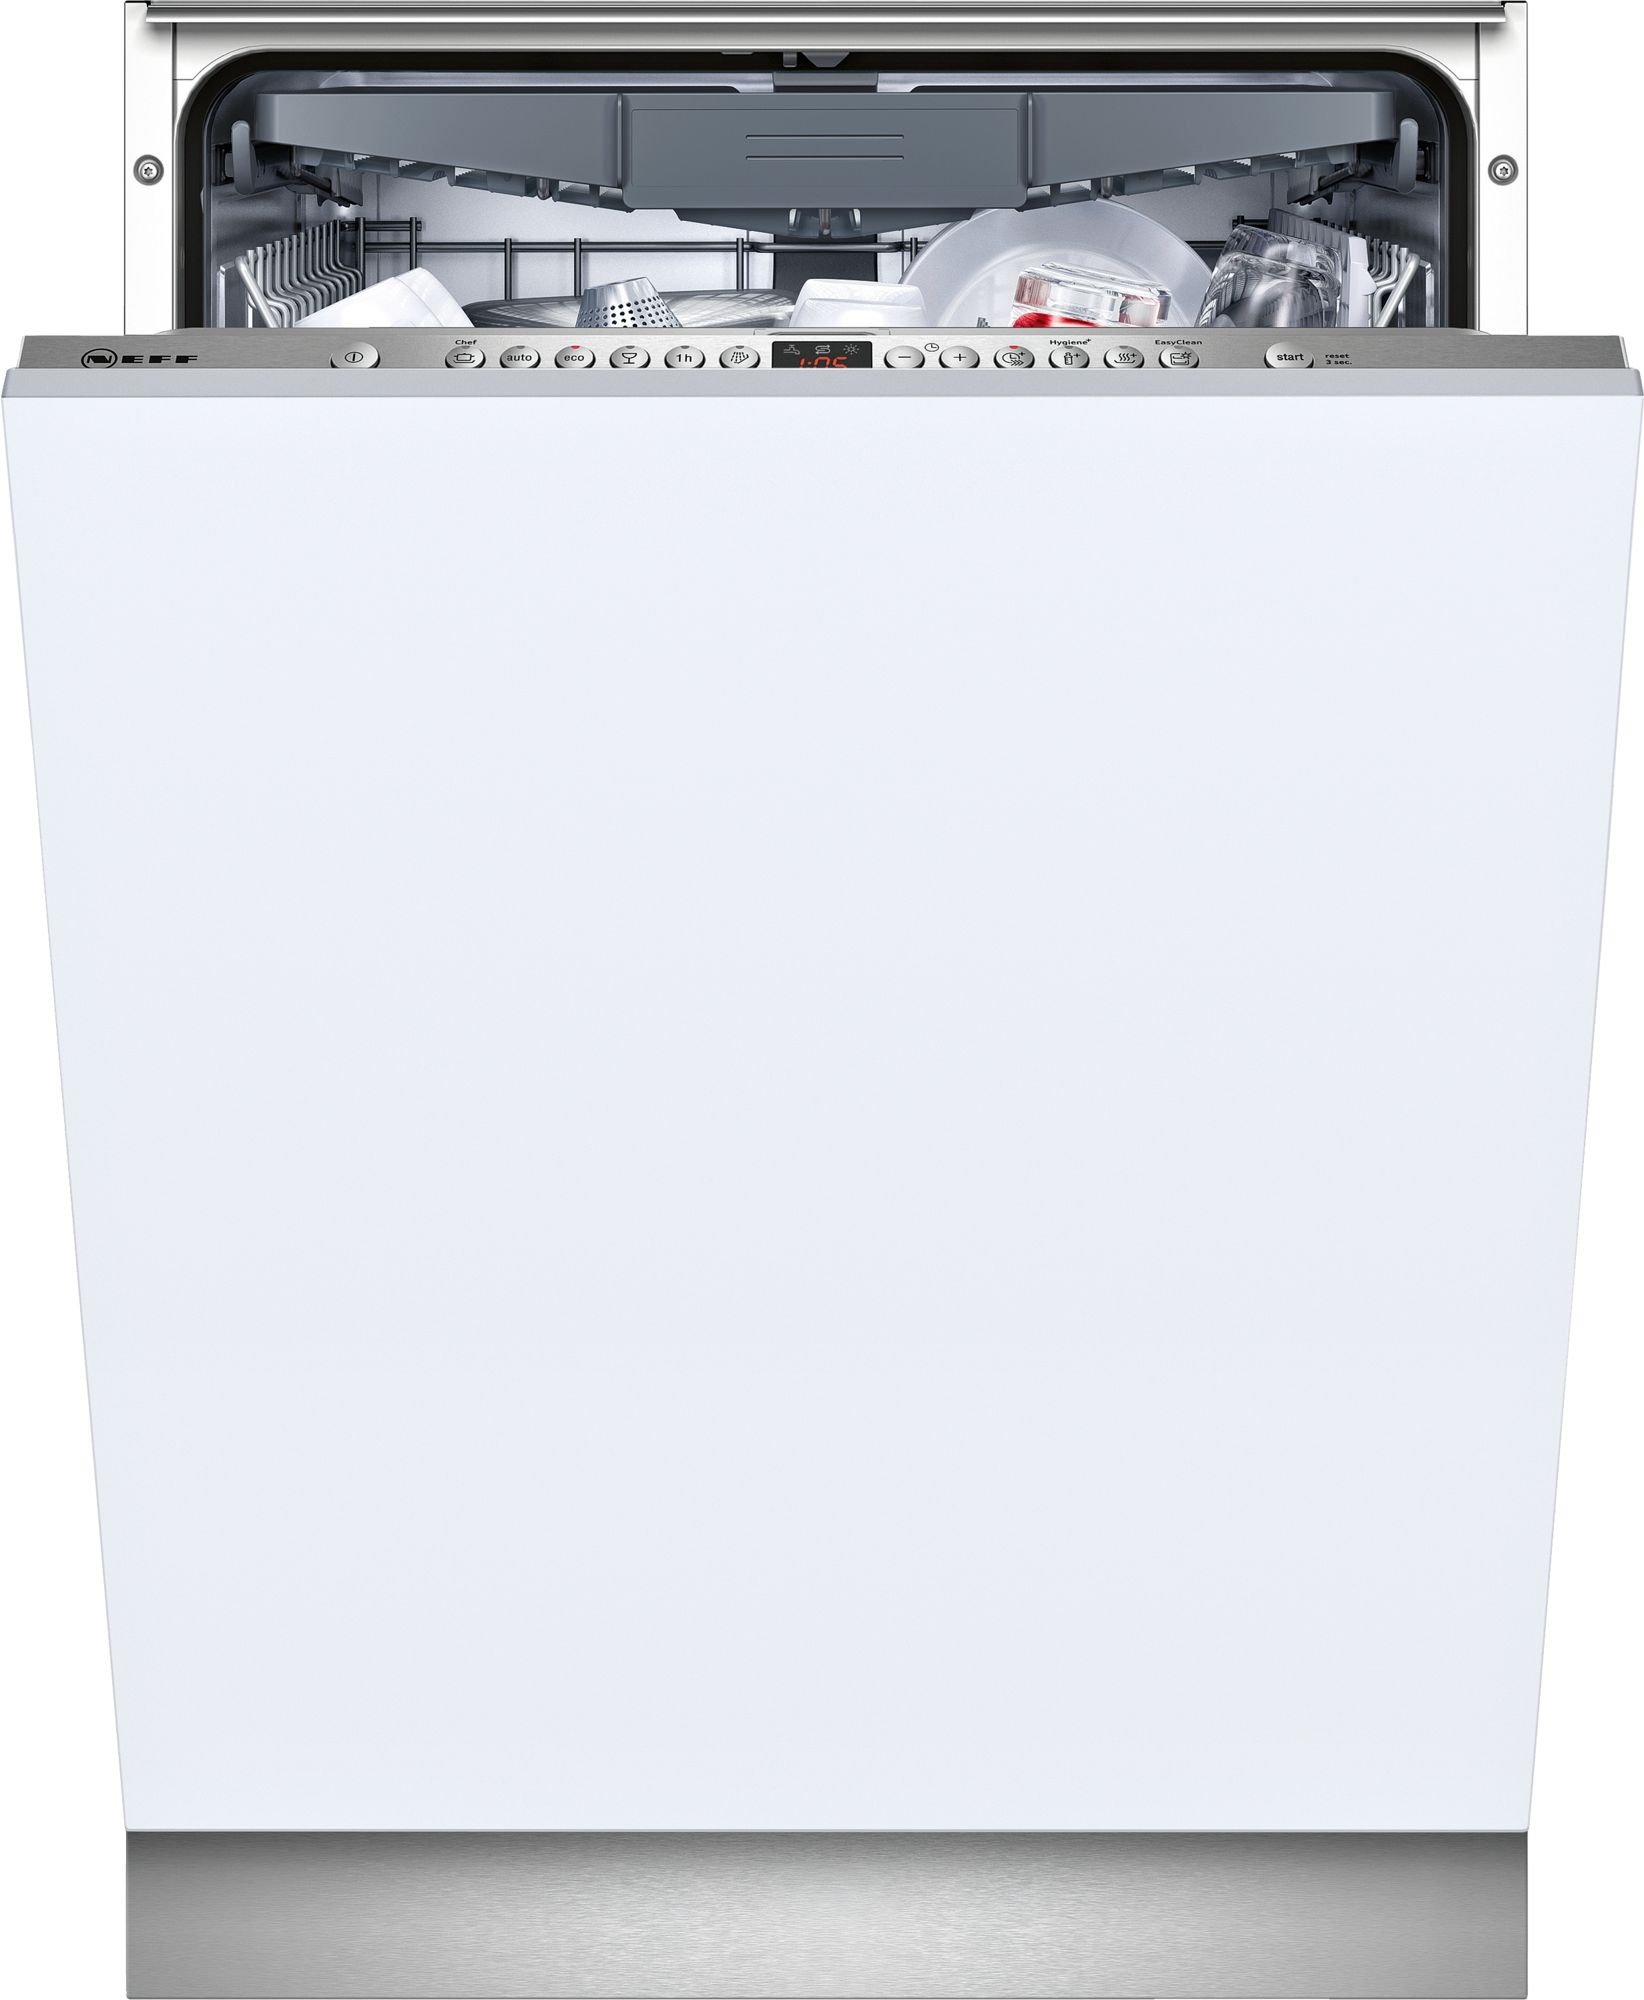 Neff S723N60X1G 60cm Fully Integrated Dishwasher XXL model